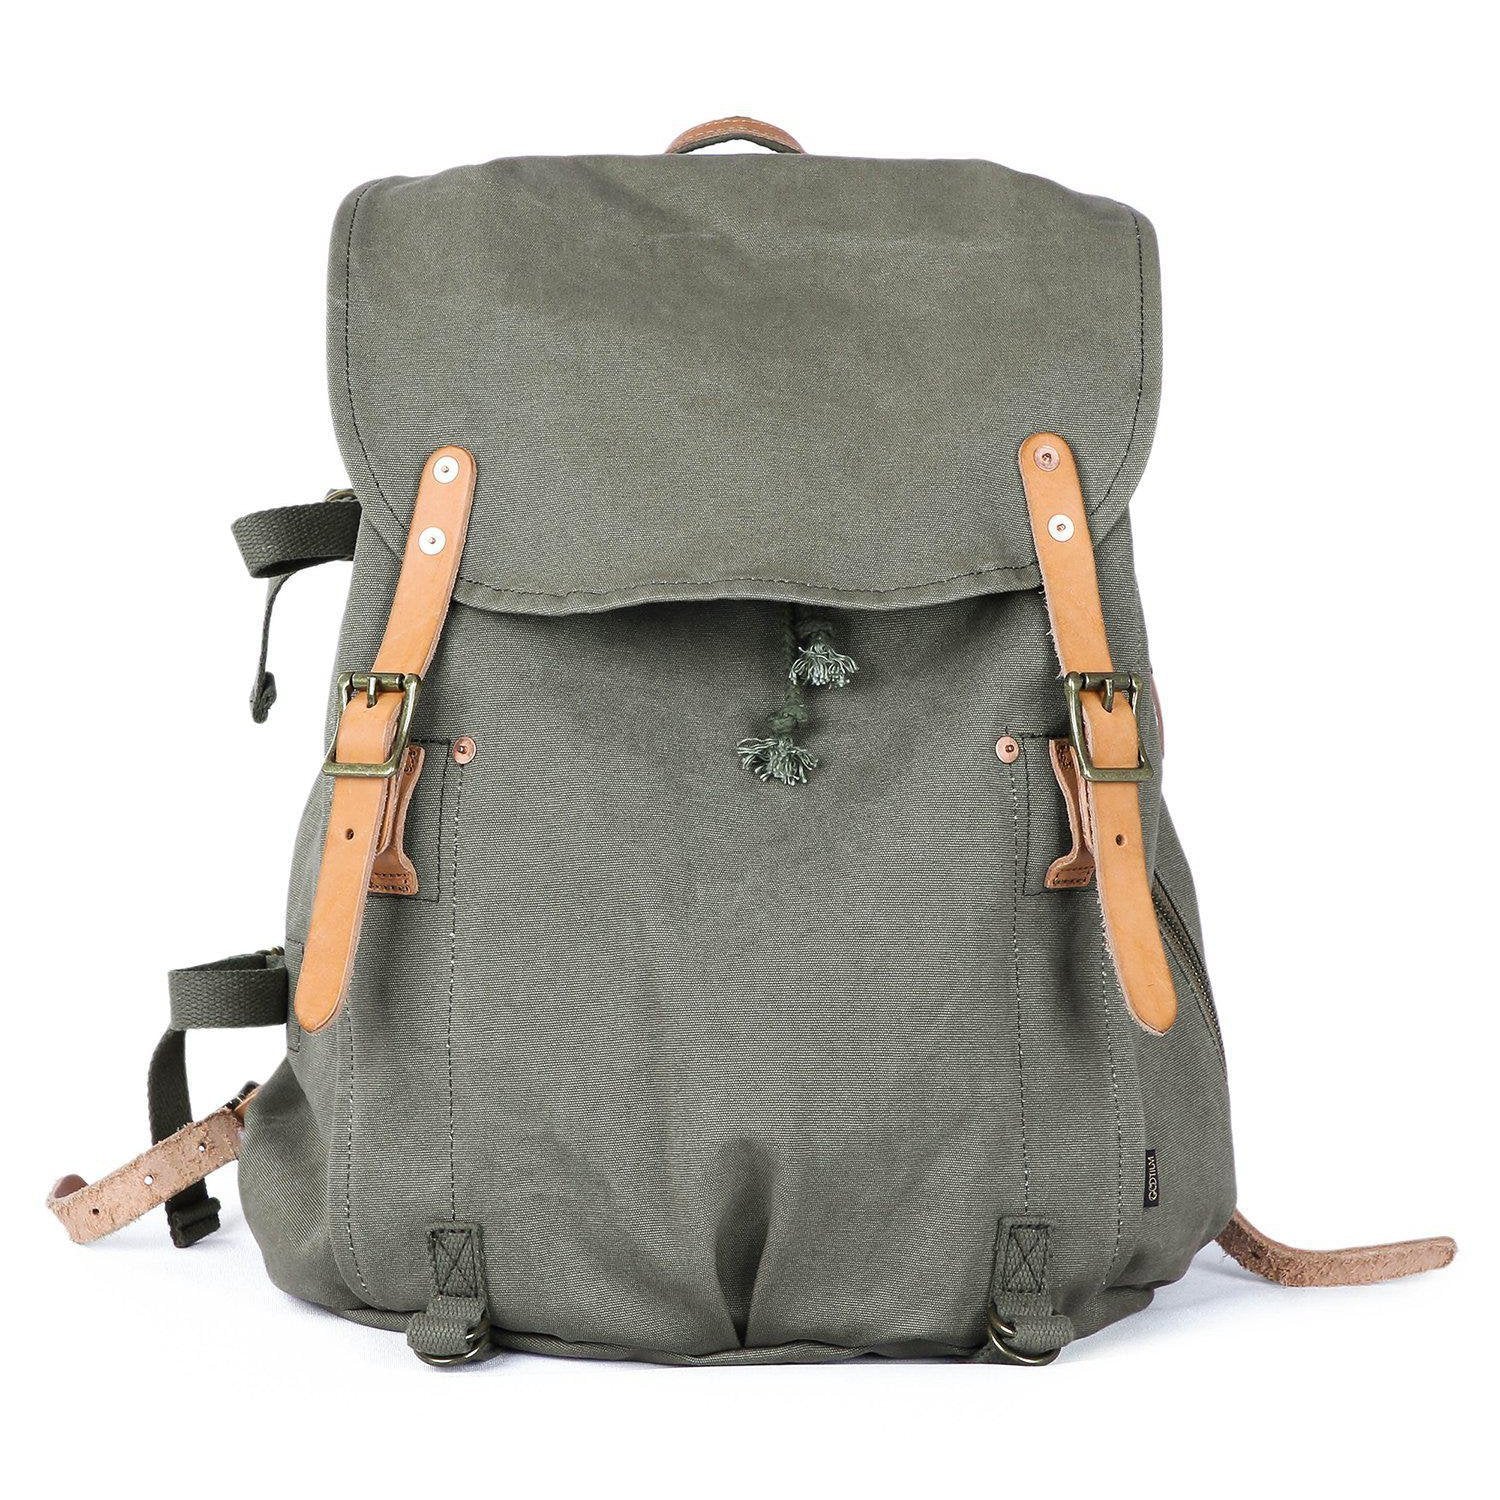 Gootium Canvas Messenger Bag - Vintage Cross Body Shoulder Satchel Army Green